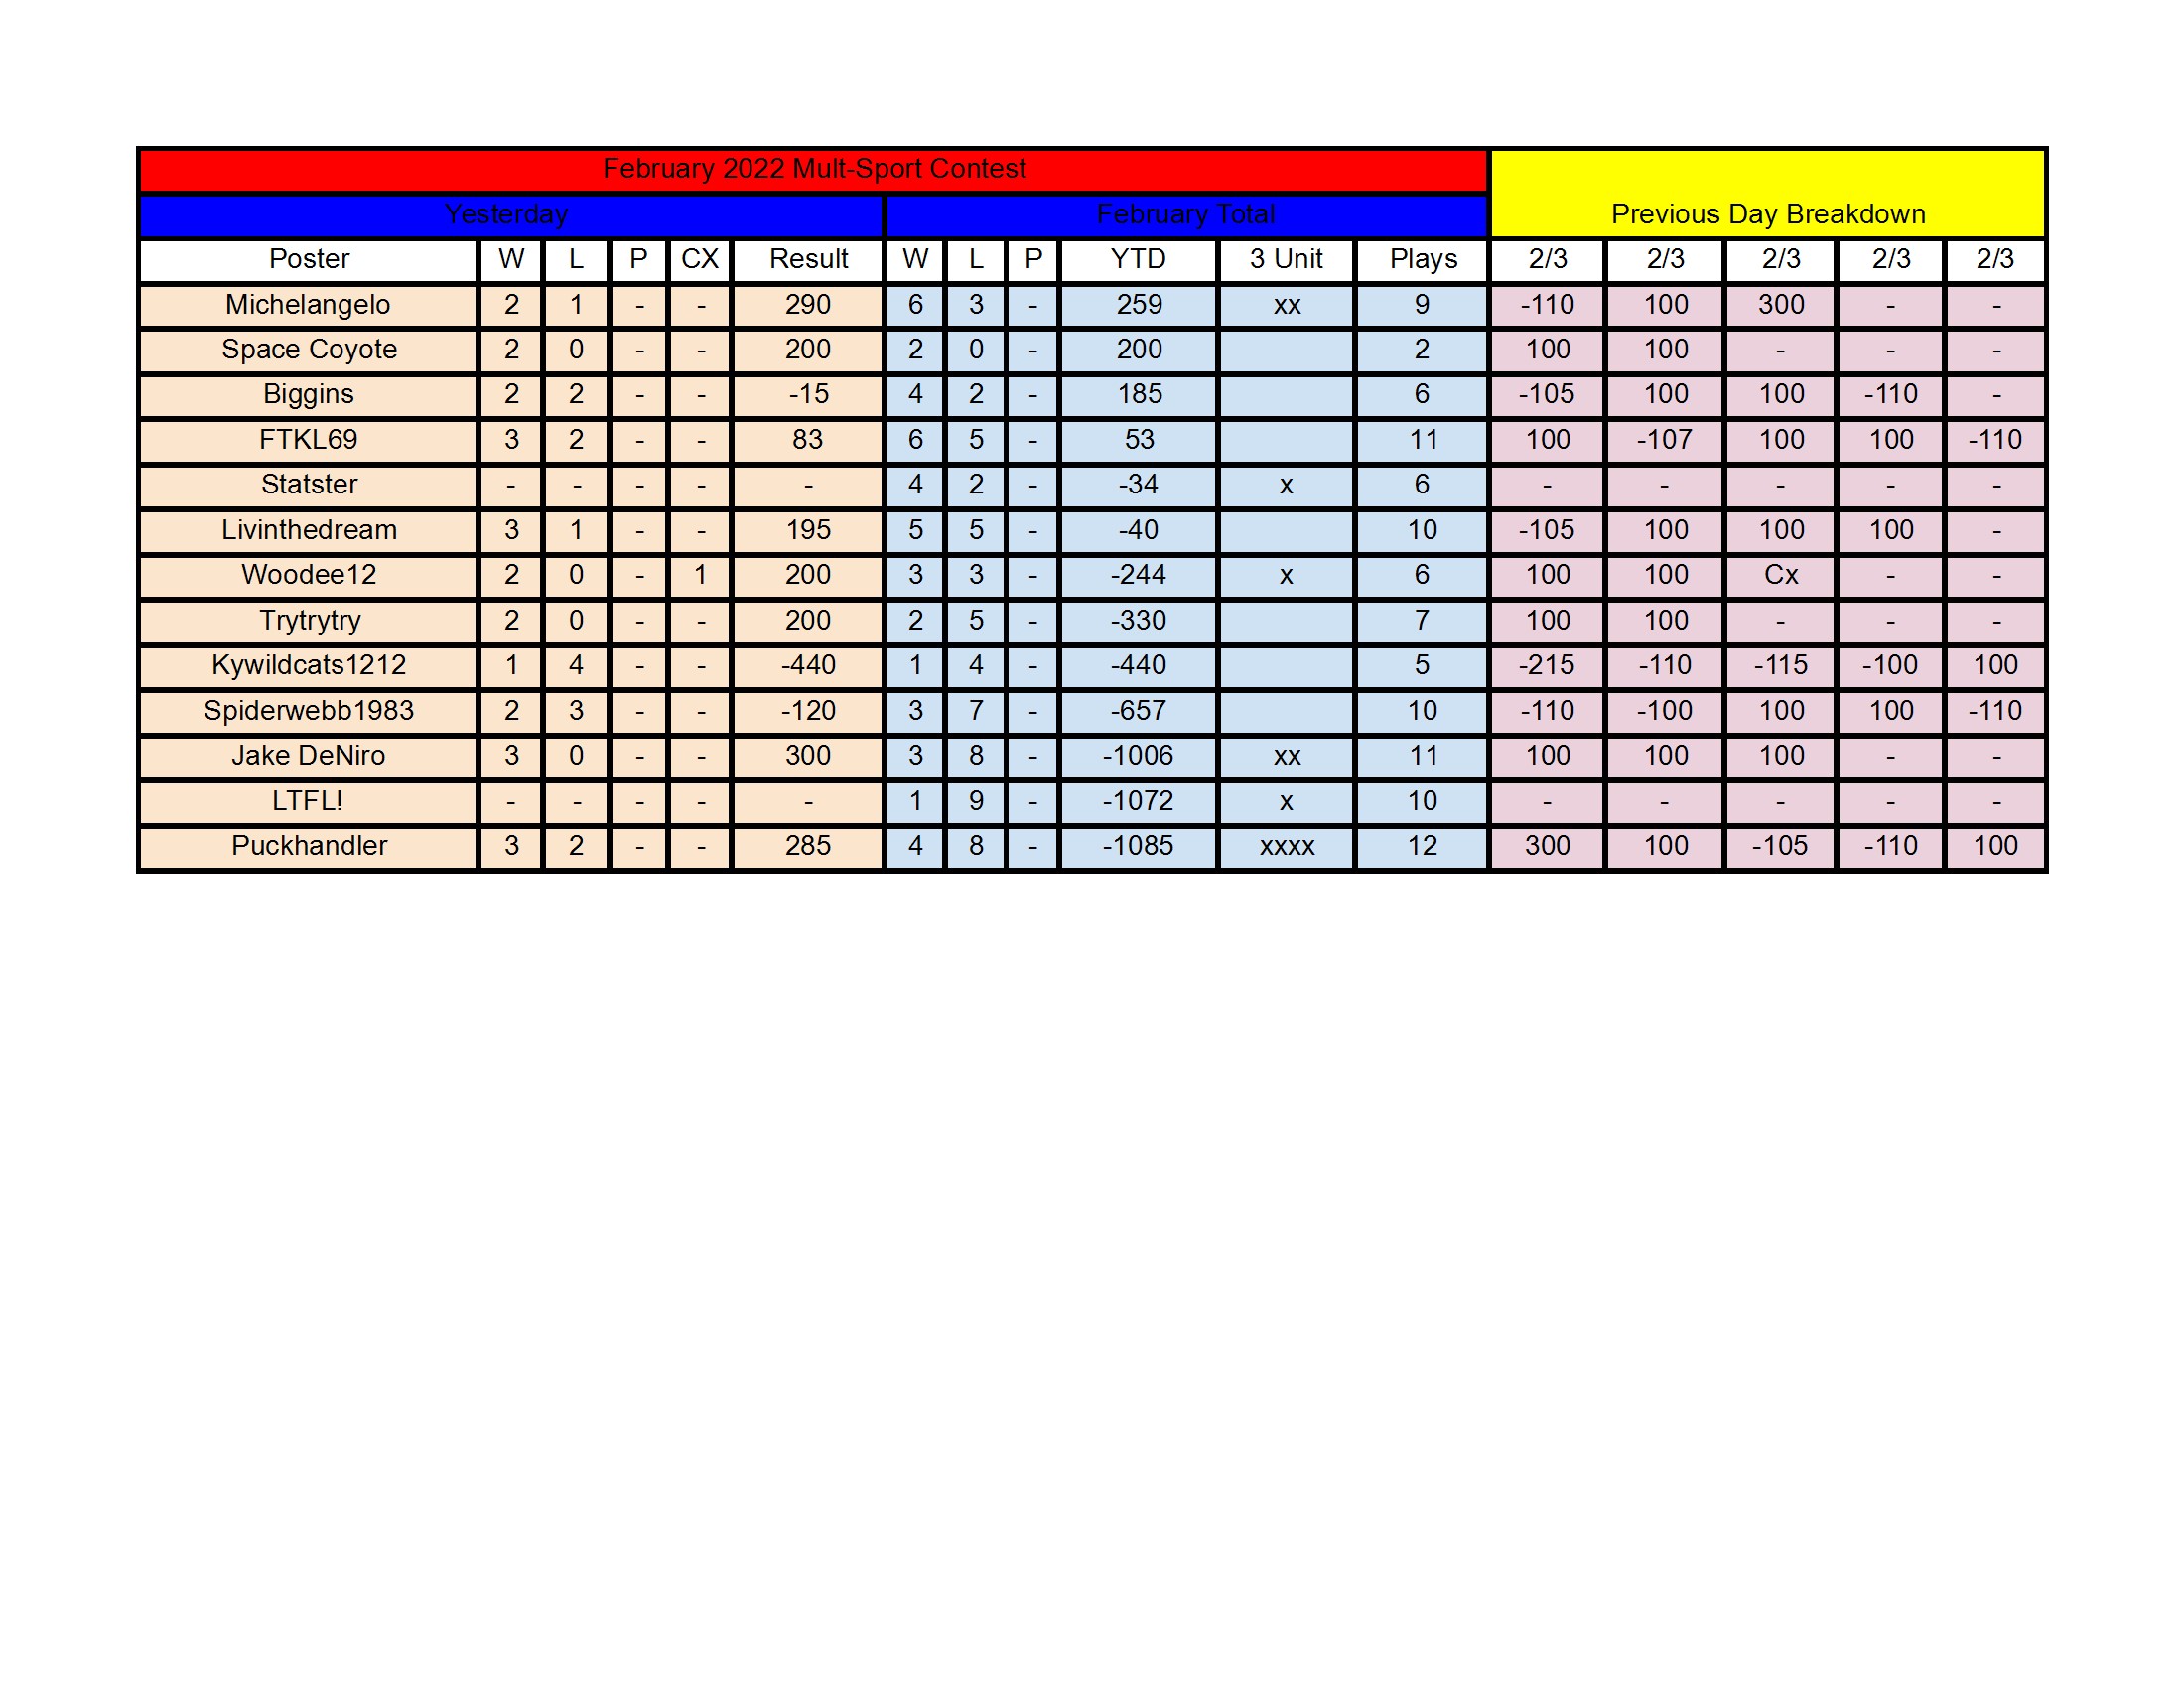 February Standings - 2_3 conv 1.jpeg